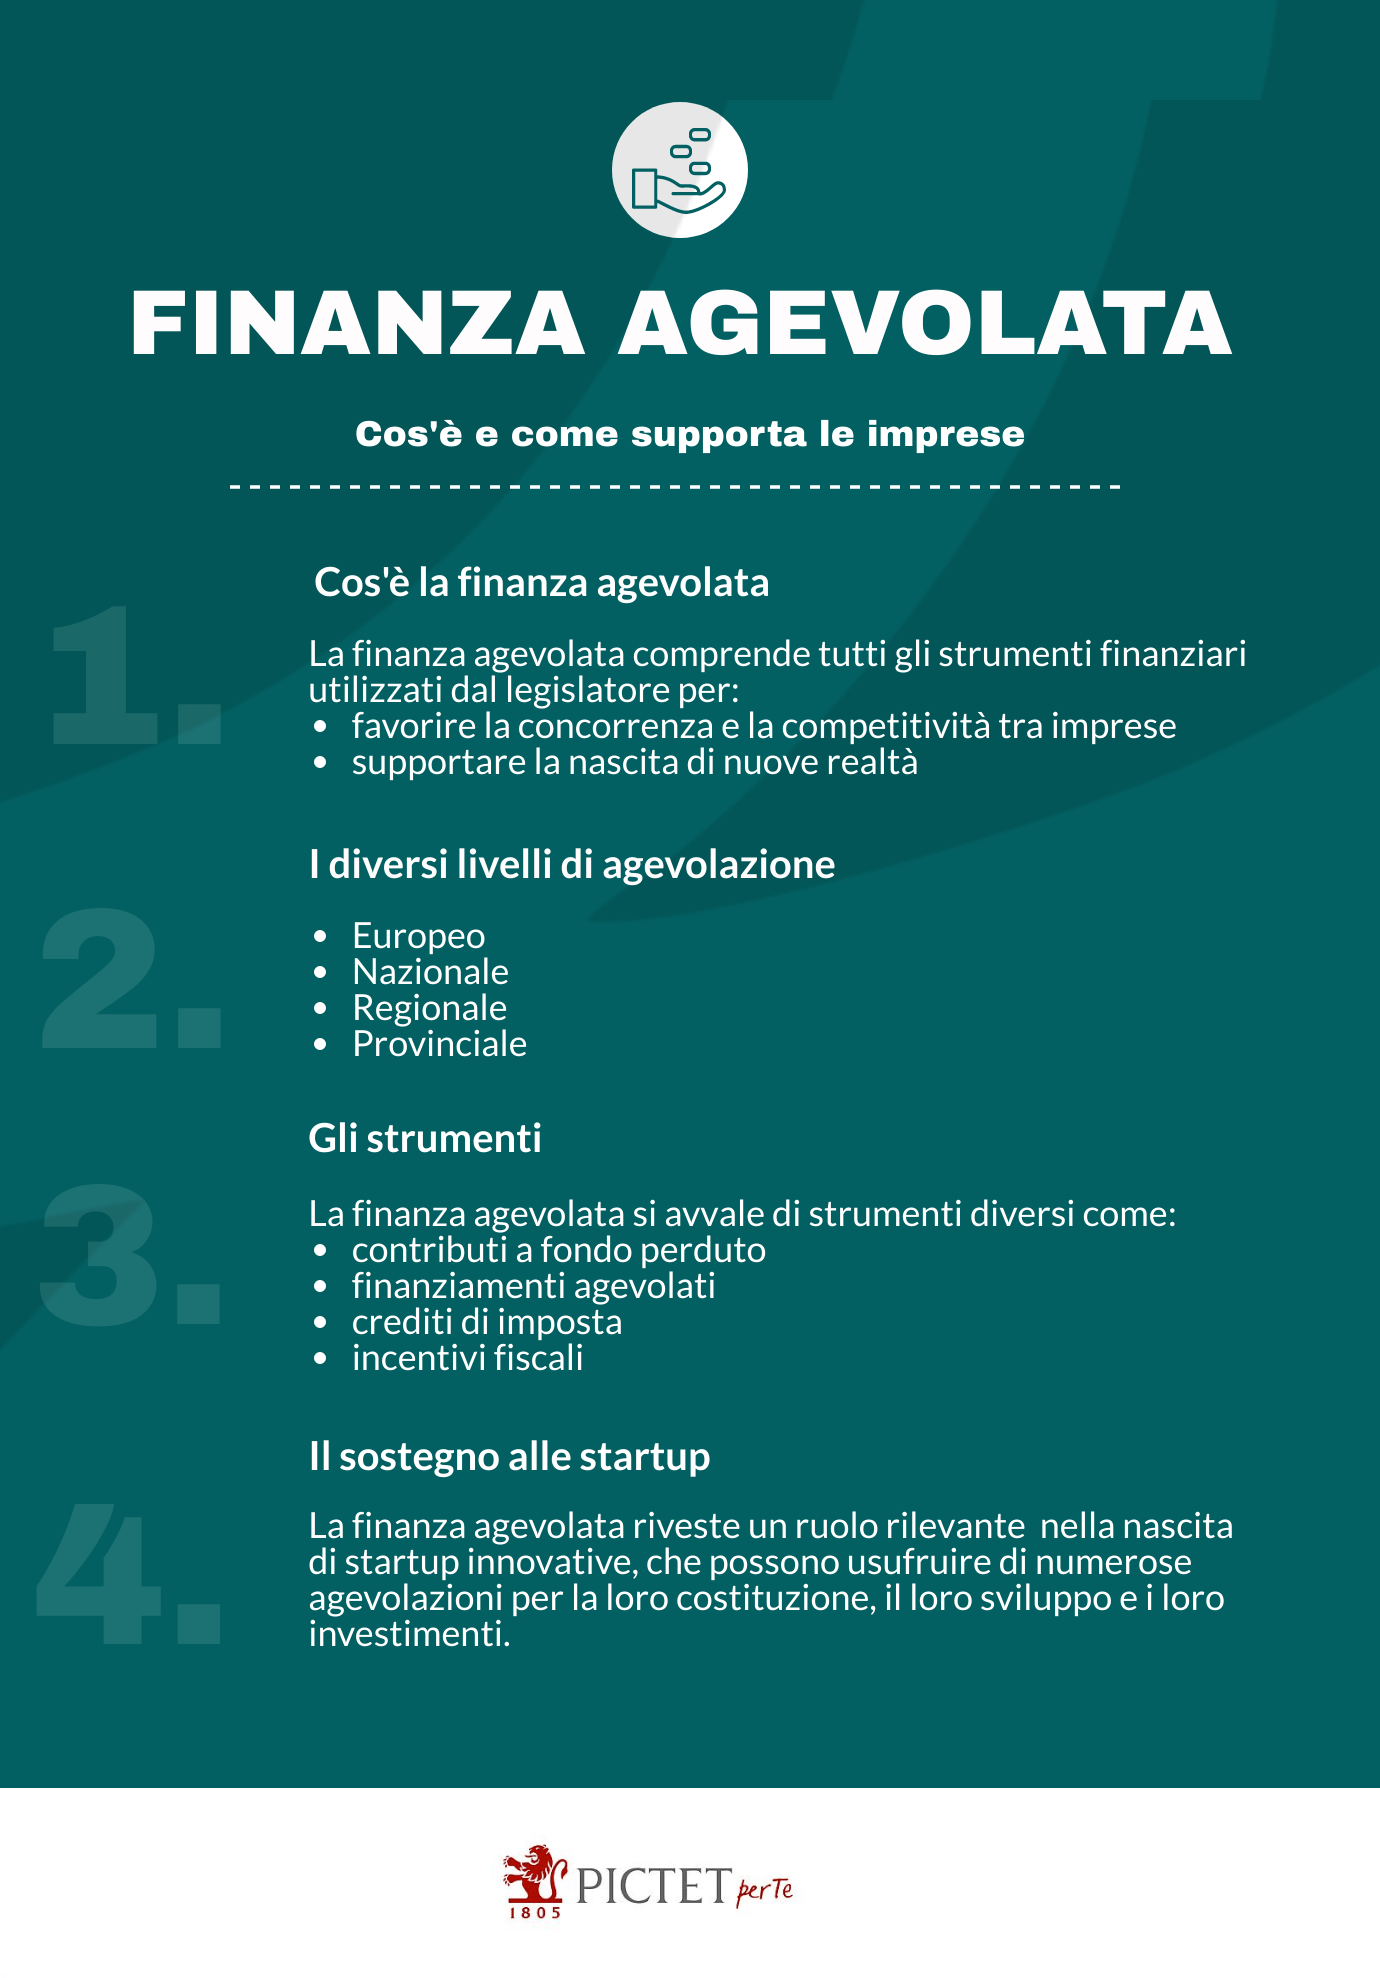 Pictet_GuidaFinanza_FinanzaAagevolata_20210907